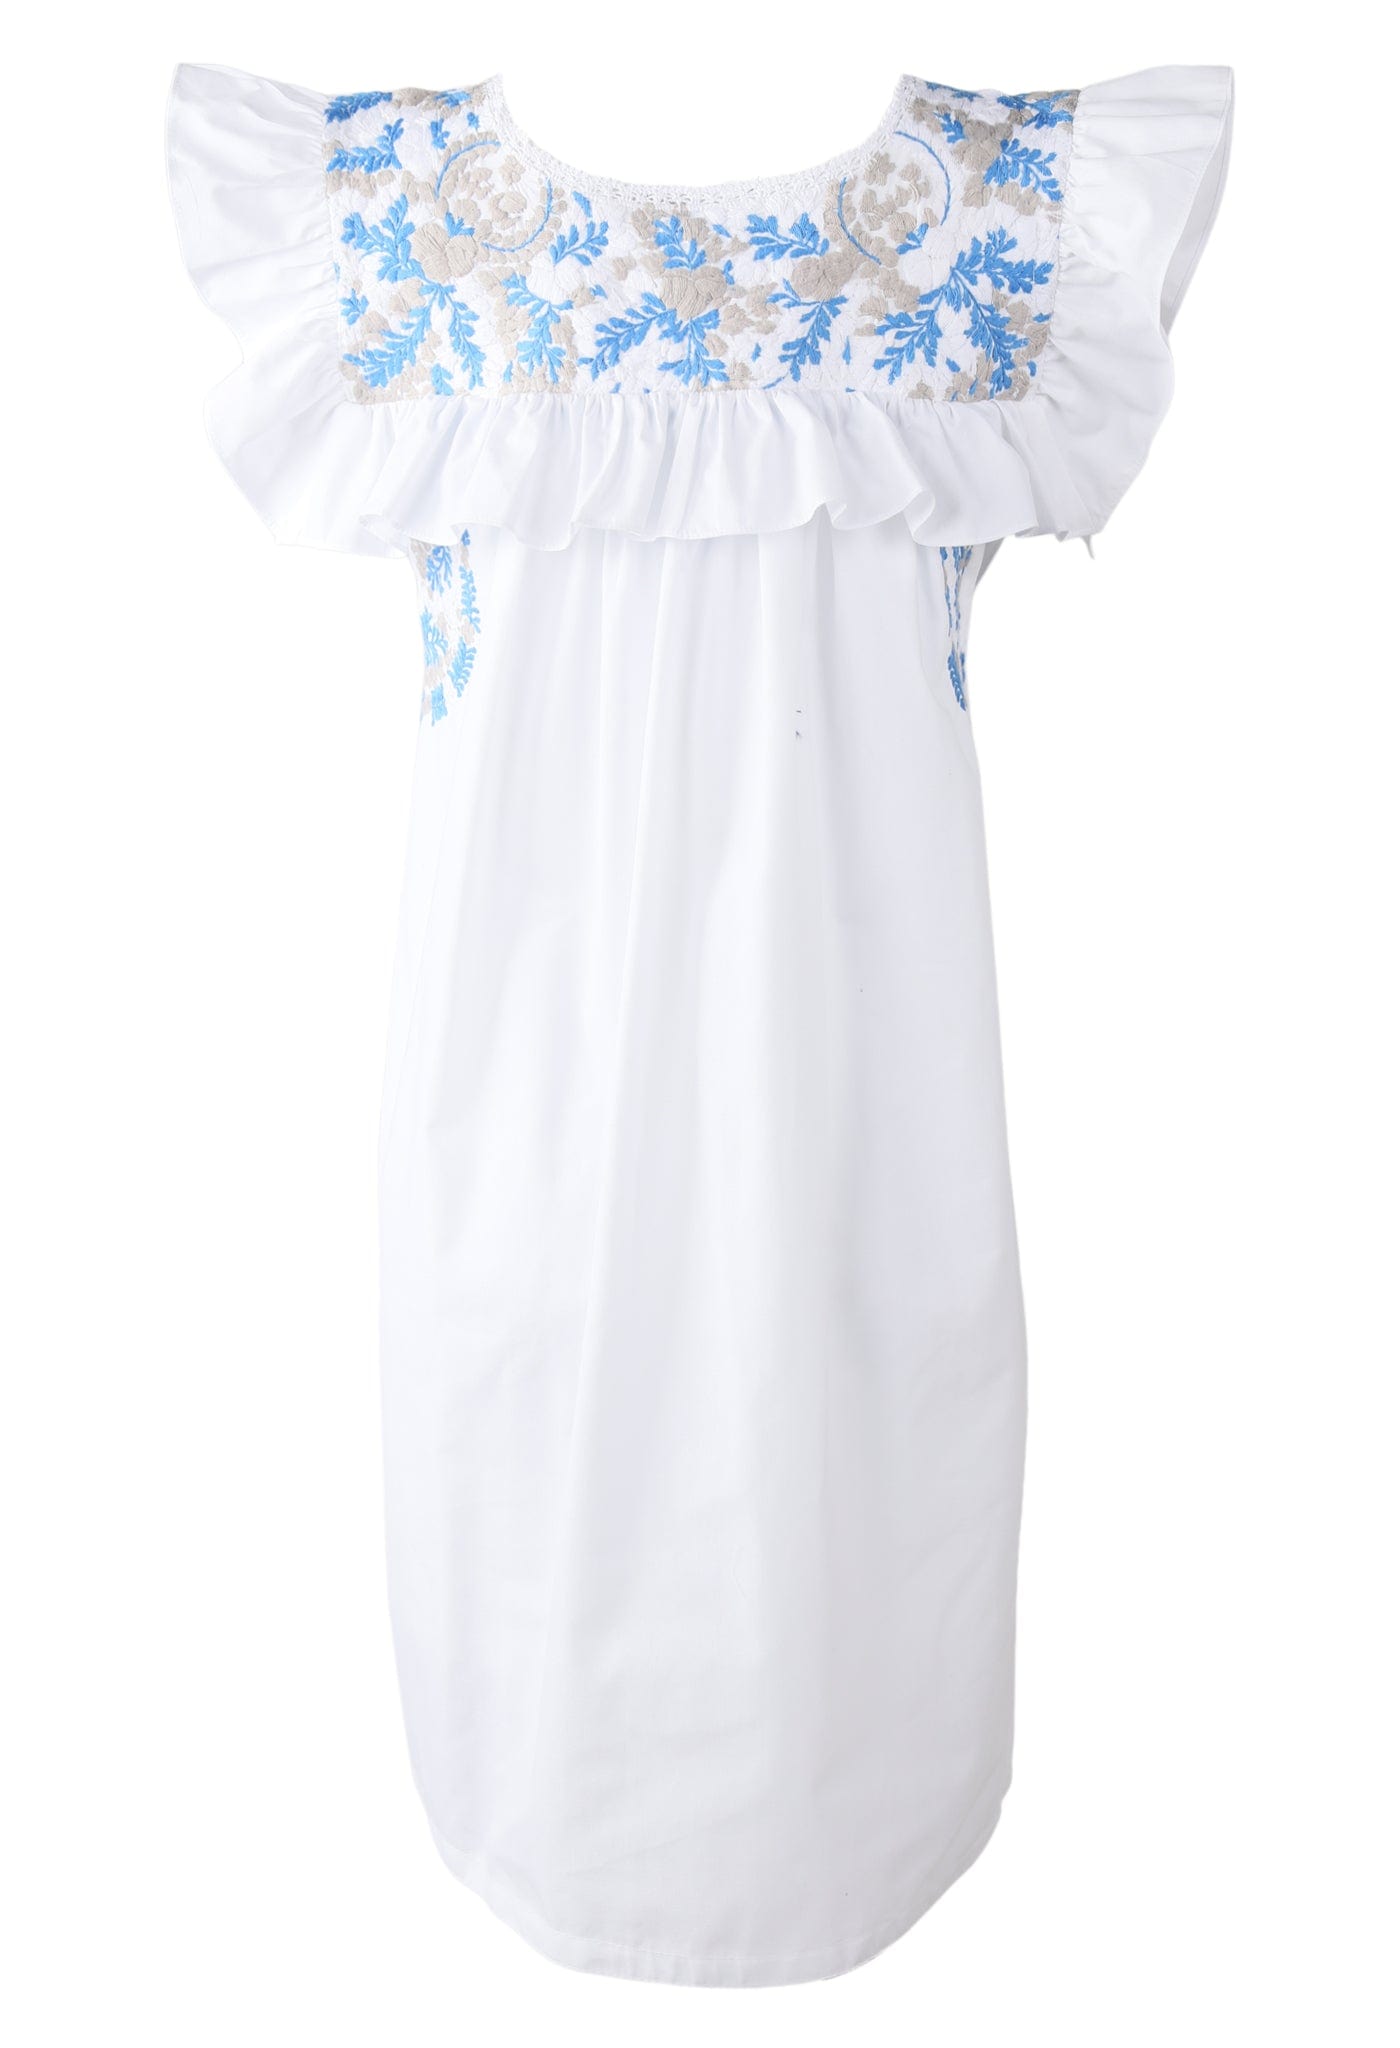 Soledad Short Dress Dress Blanca Nieve Frances y Gris